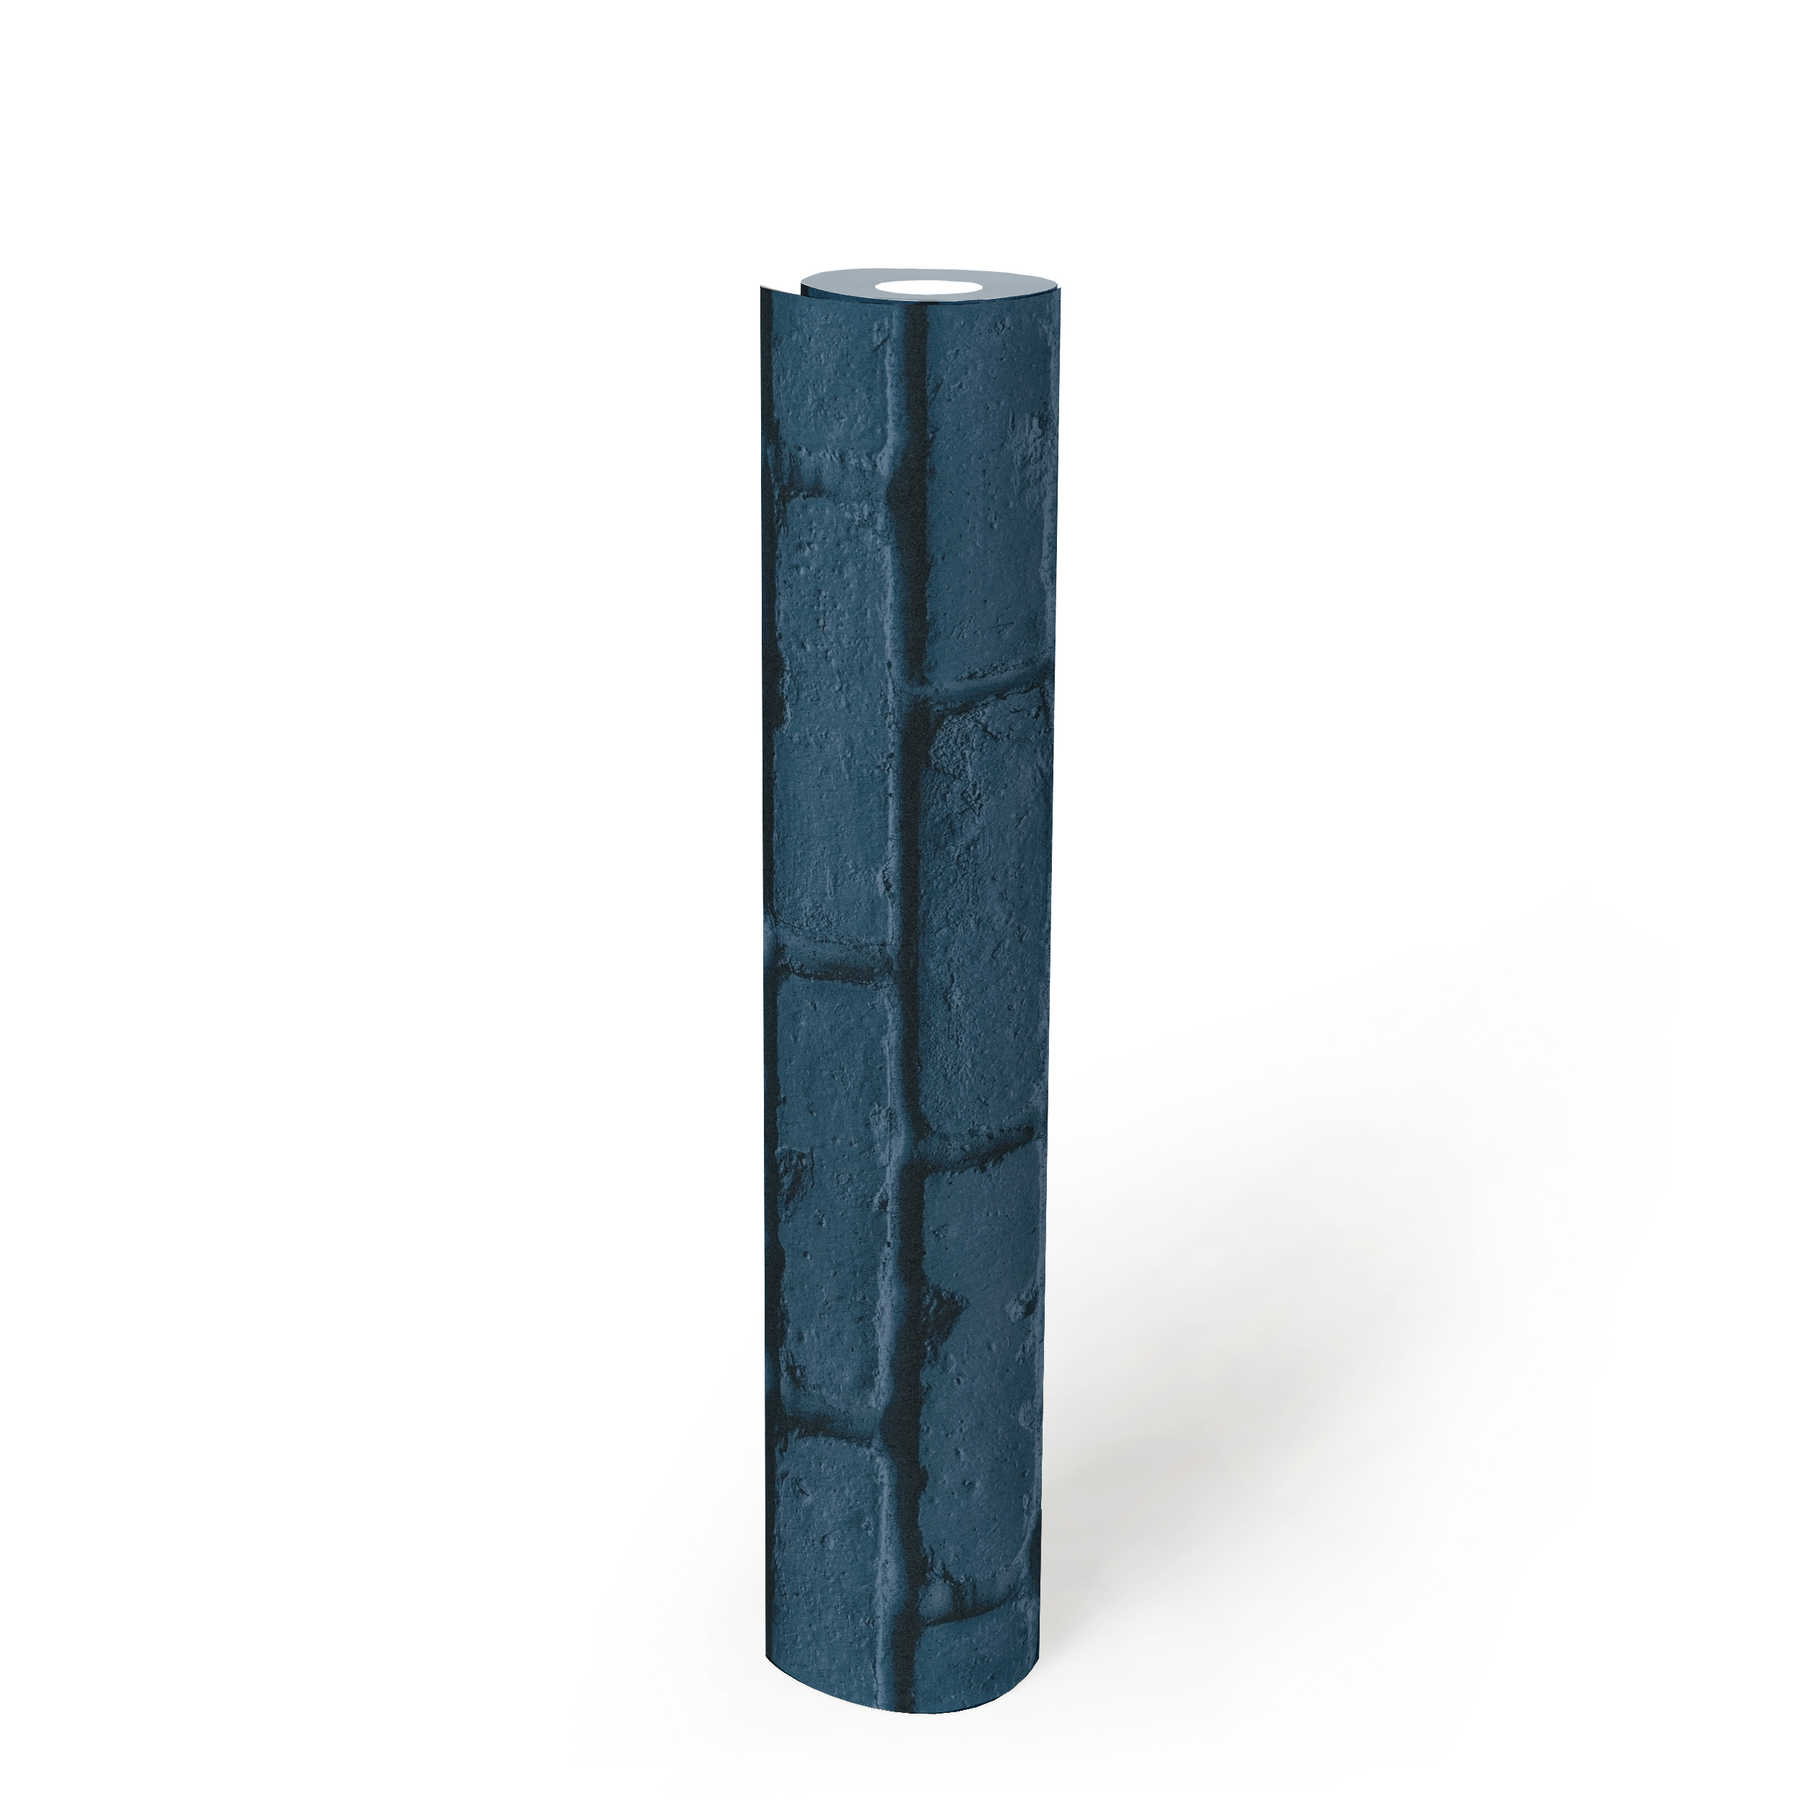             3D wallpaper stone look coloured brick wall - blue
        